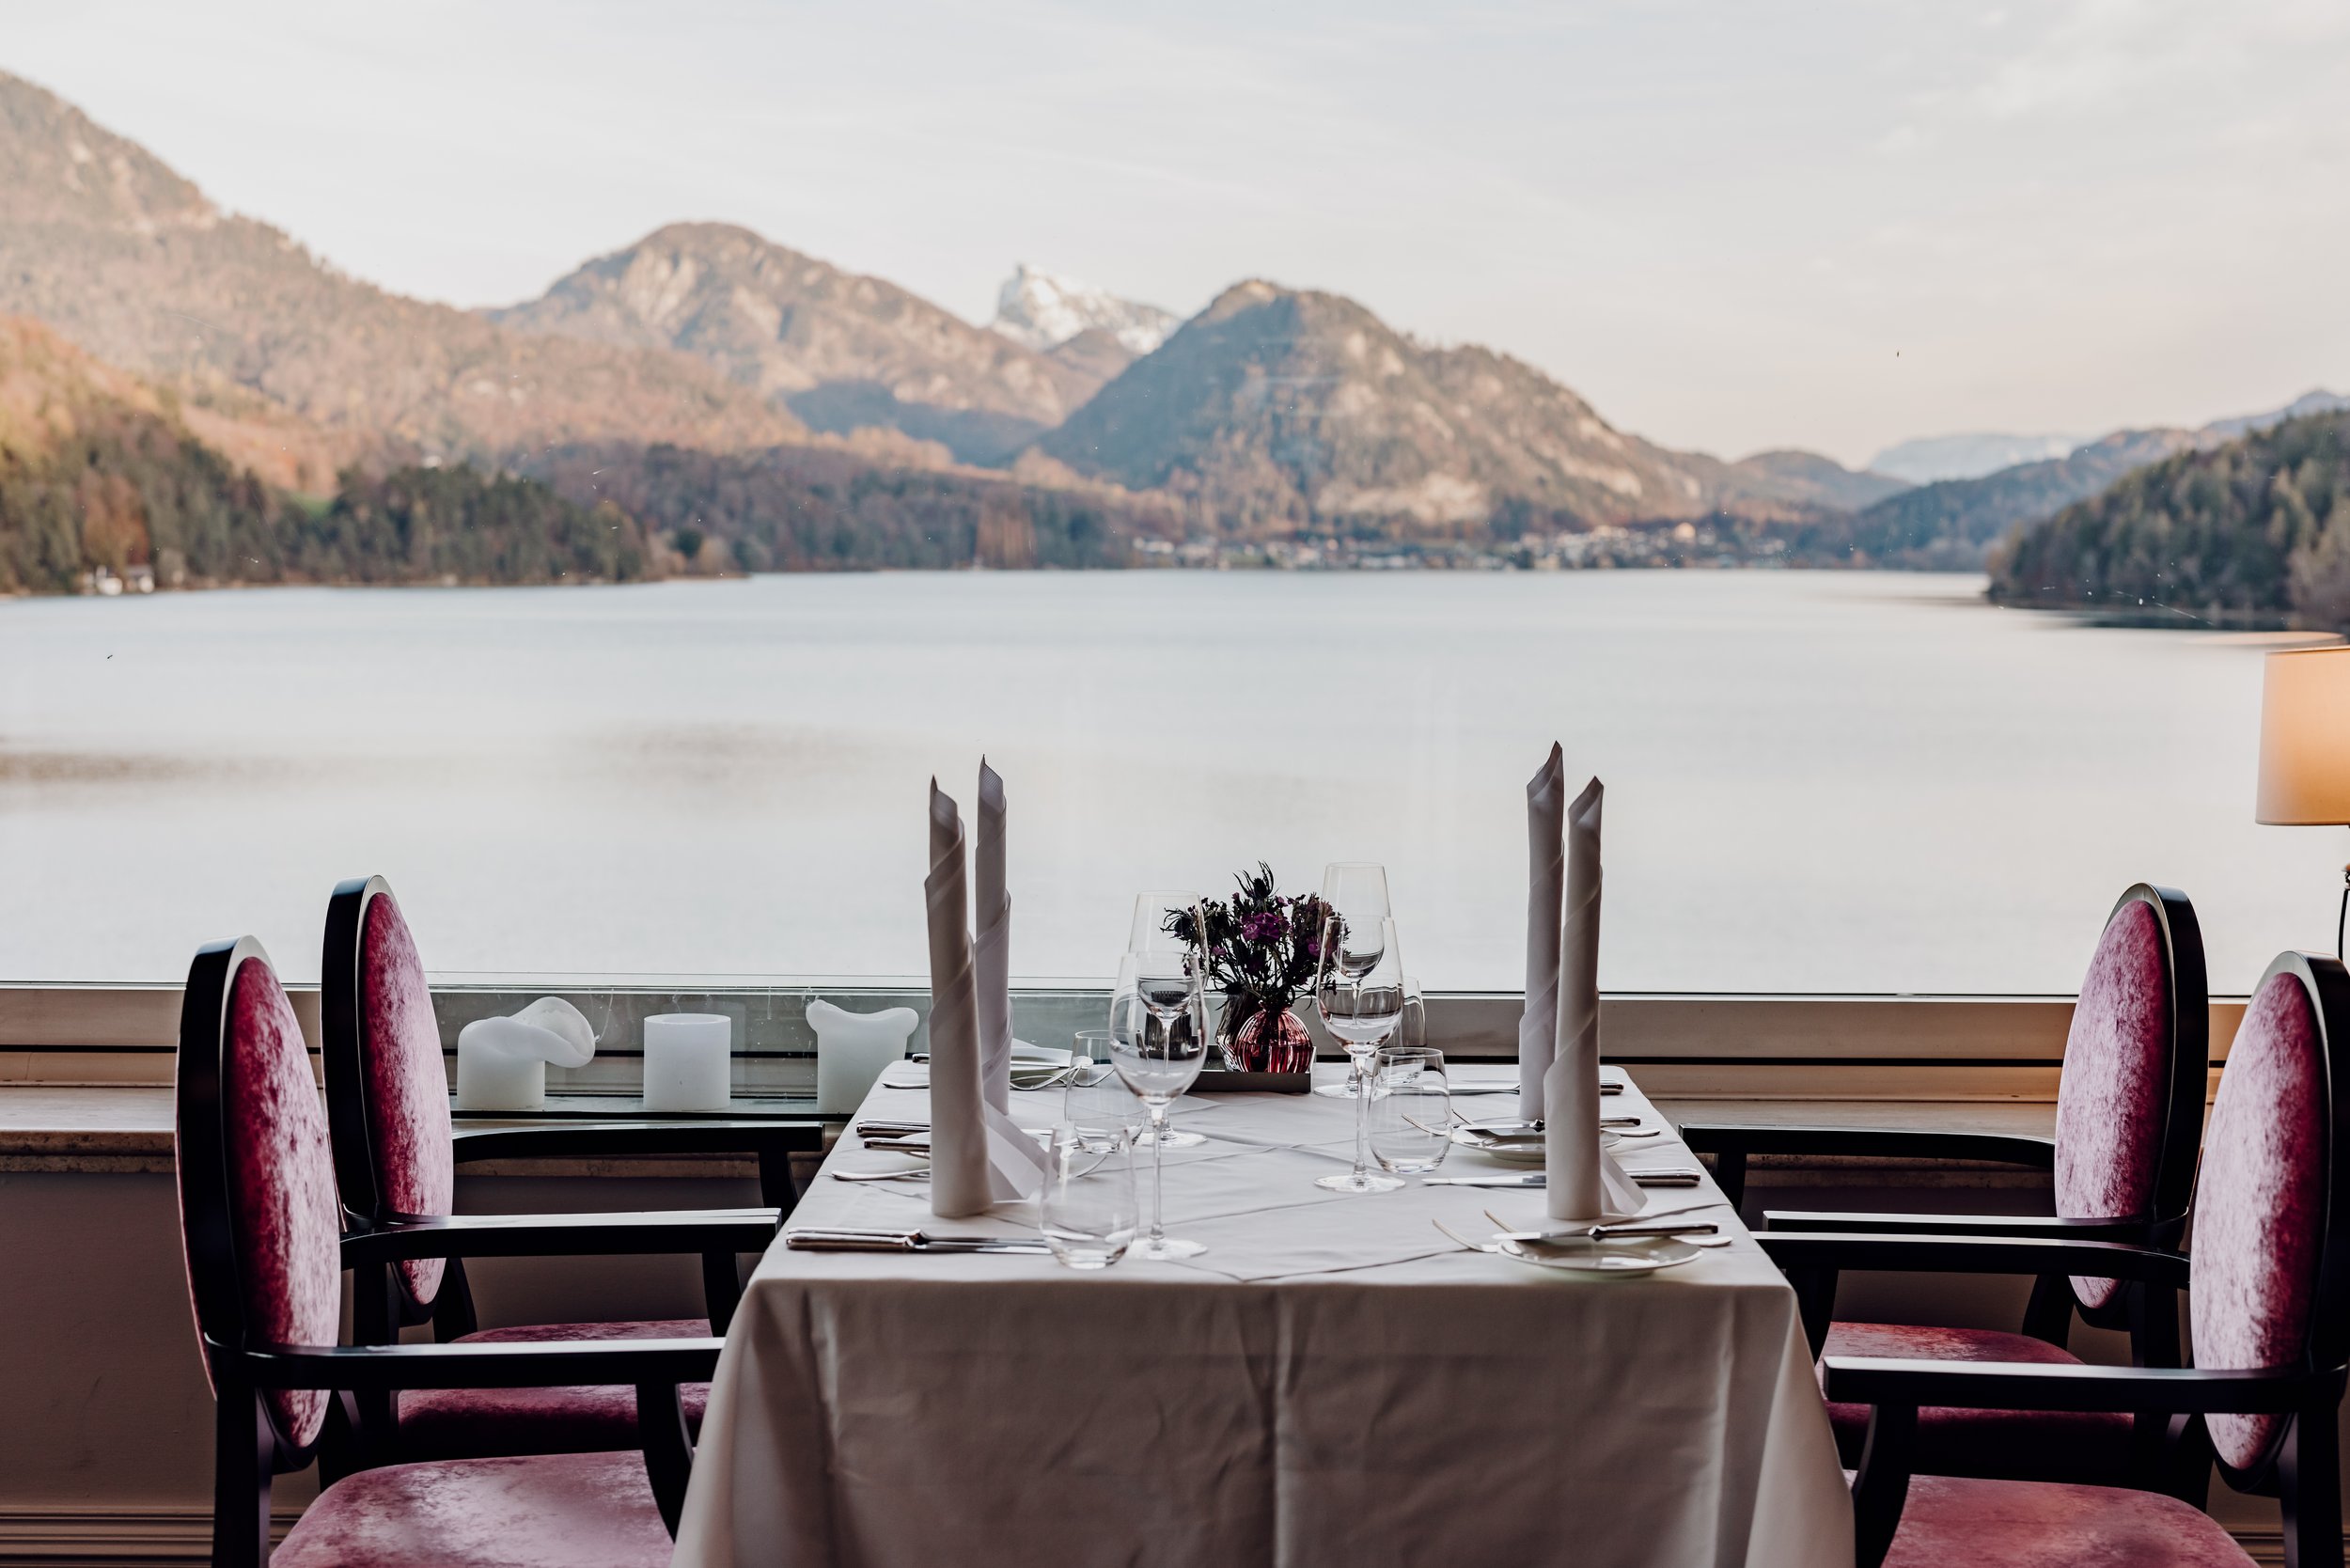 Dining overlooking Lake Fuschl at Schloss Fuschl, a hotel in the Marriott Luxury Collection in Salzburg, Austria